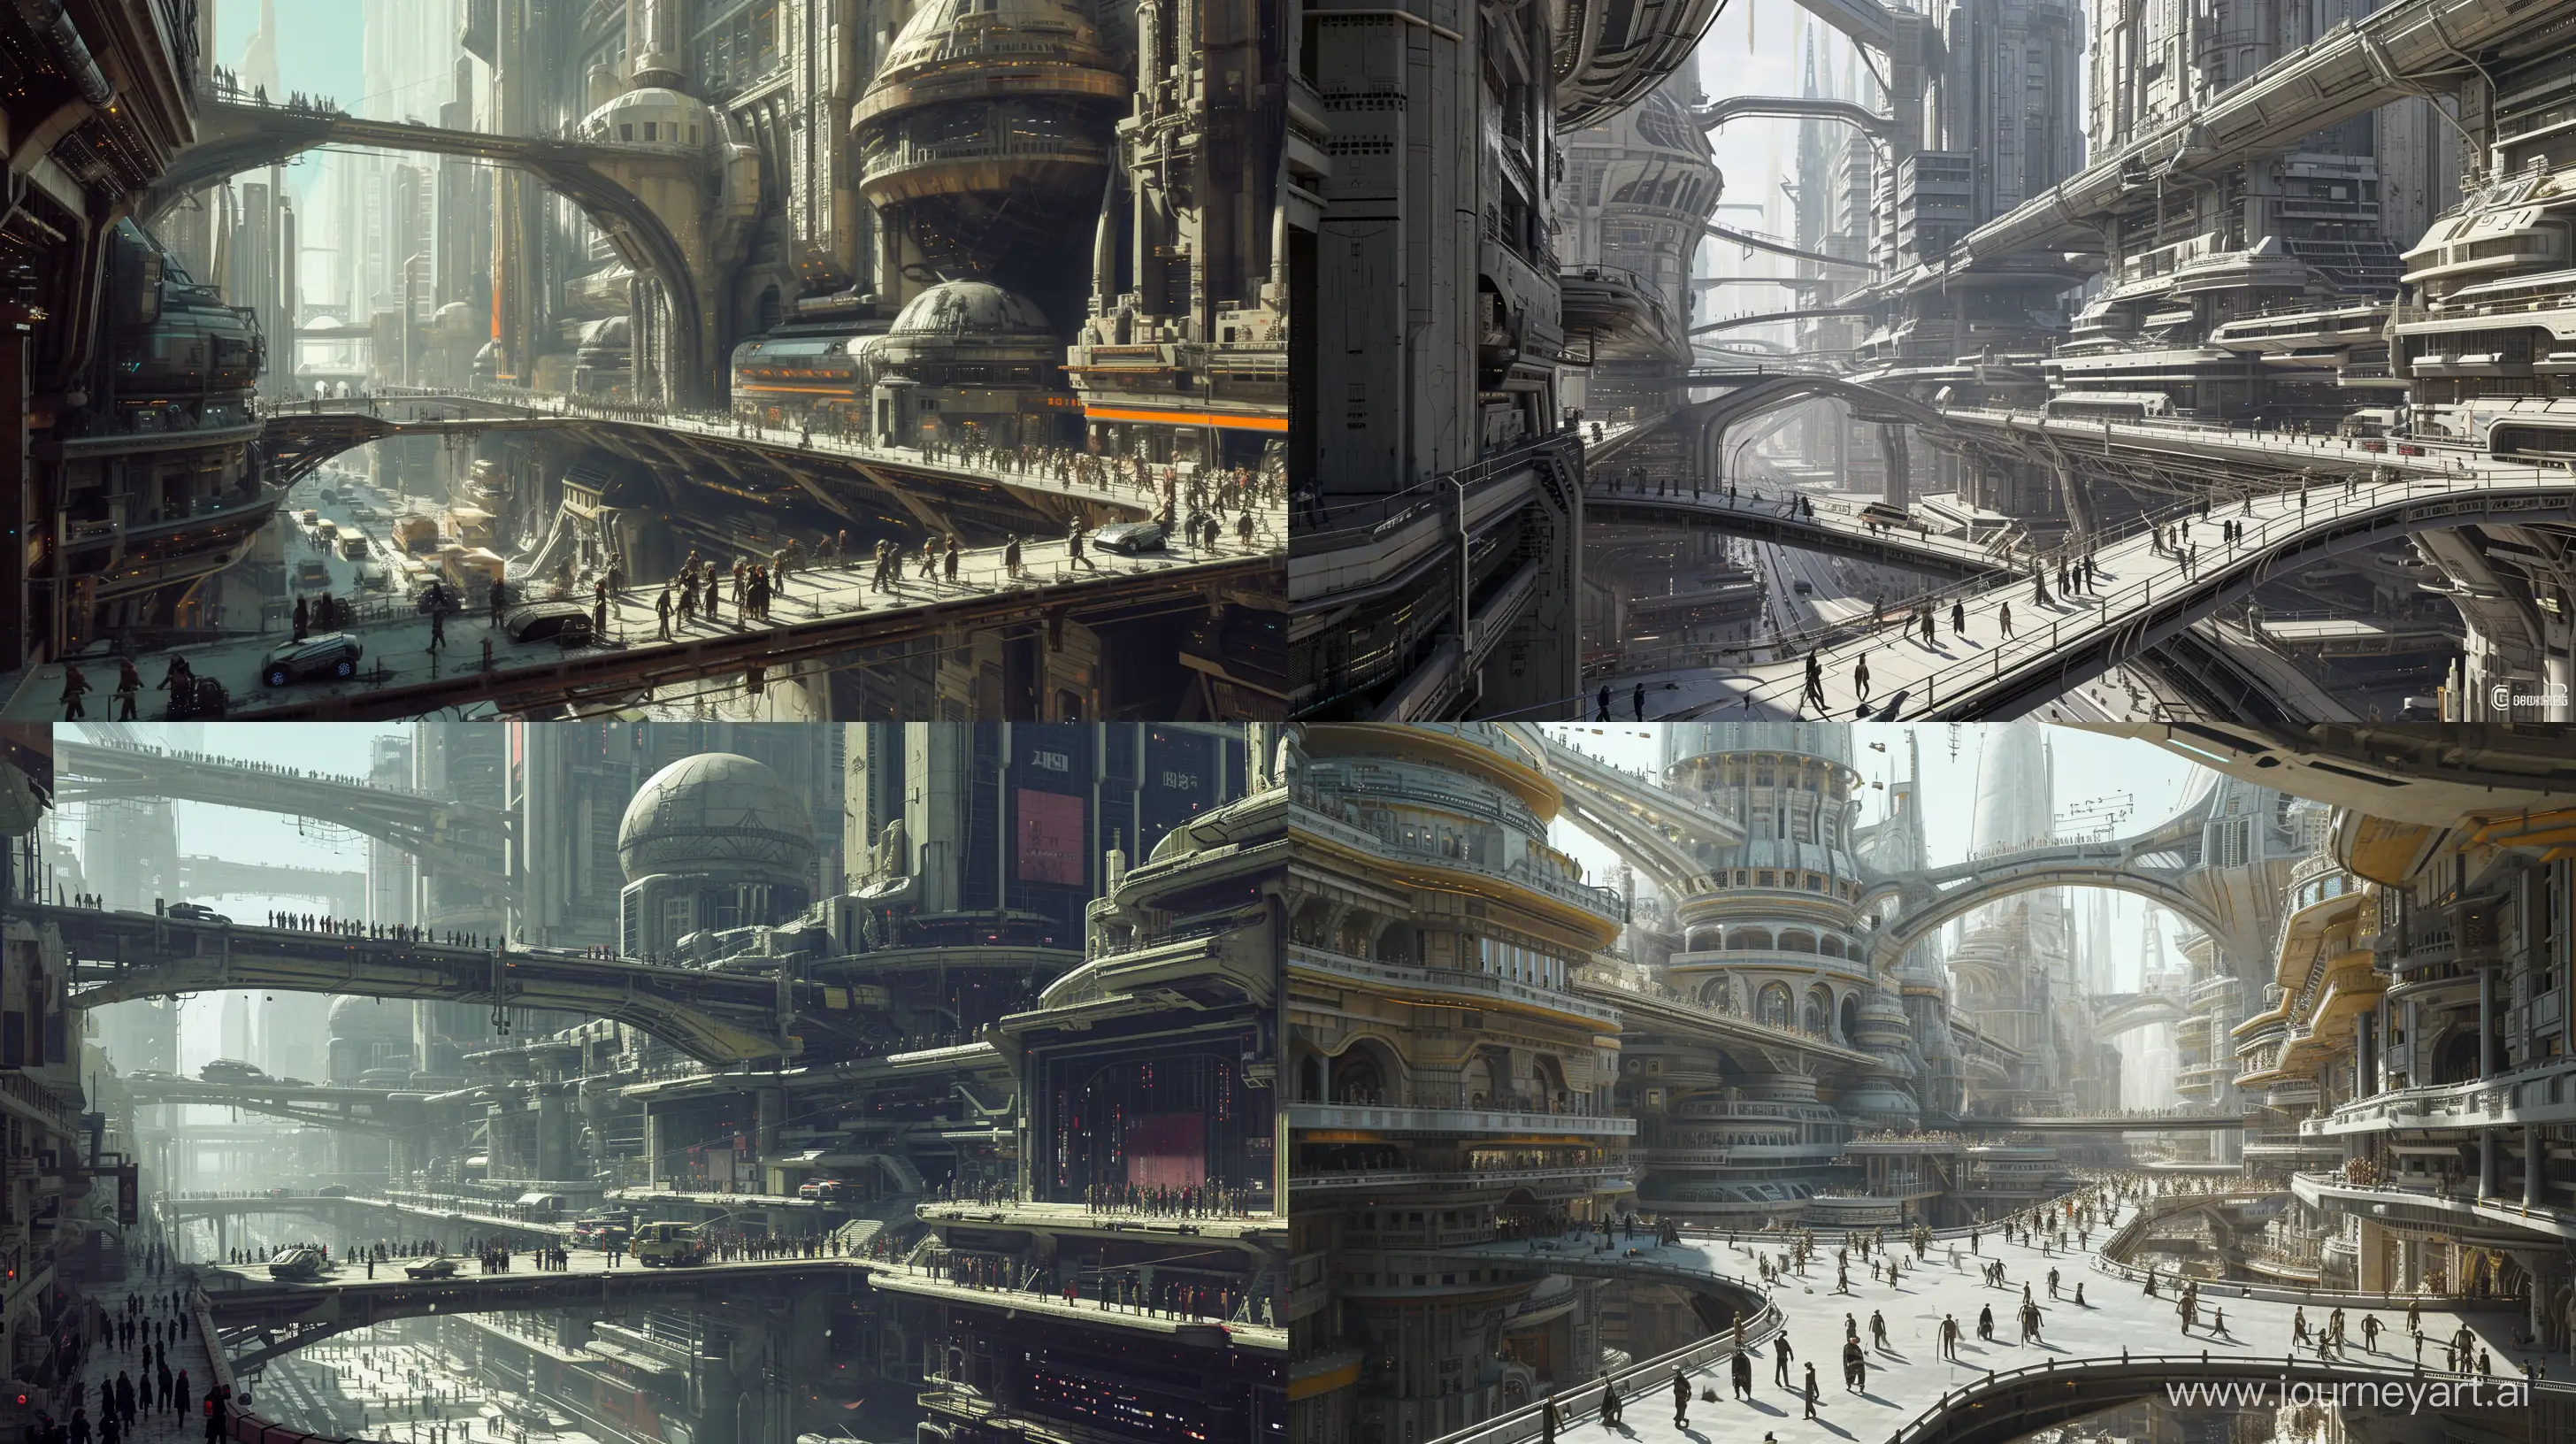 Futuristic-Cyberpunk-Metropolis-Neo-Babylon-HighDensity-Architecture